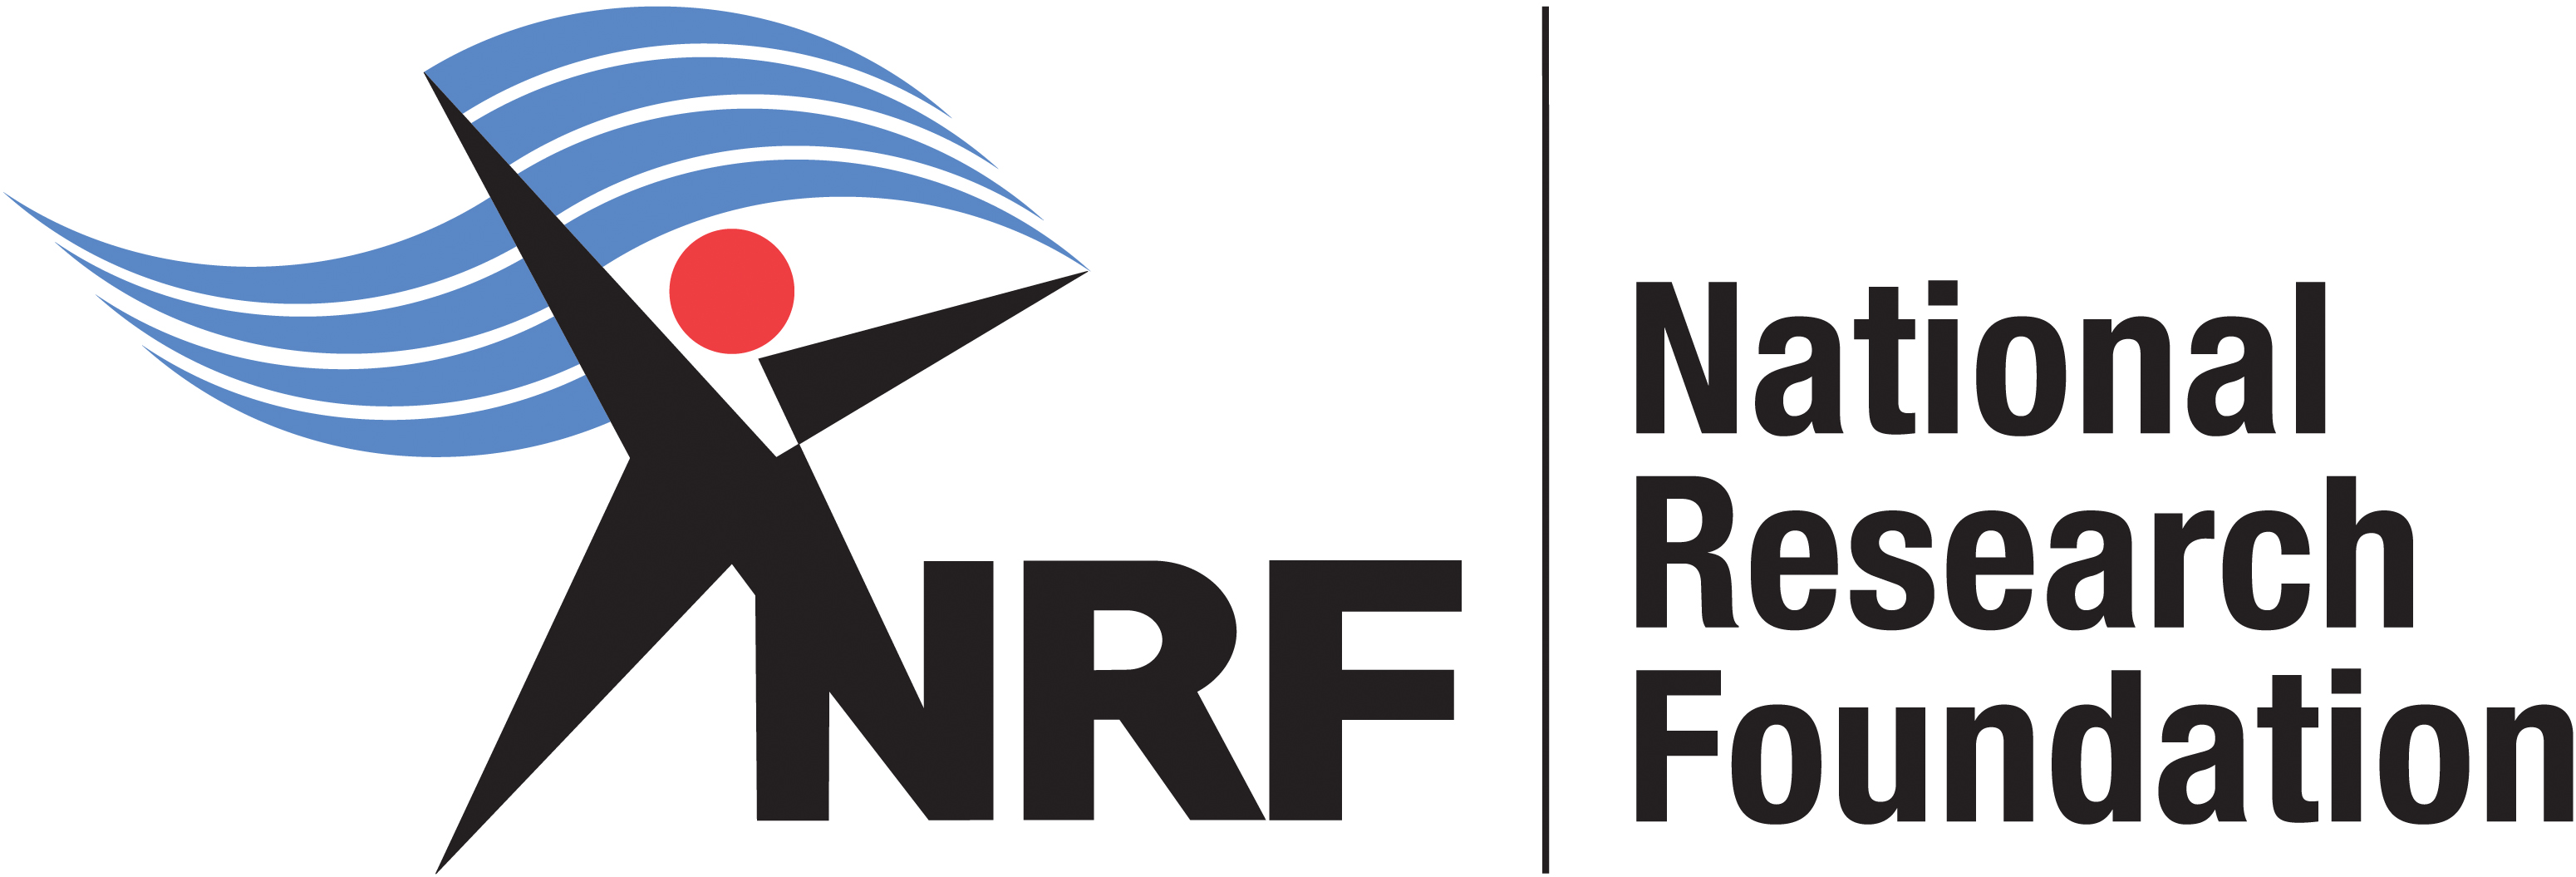 National Reserach Foundation